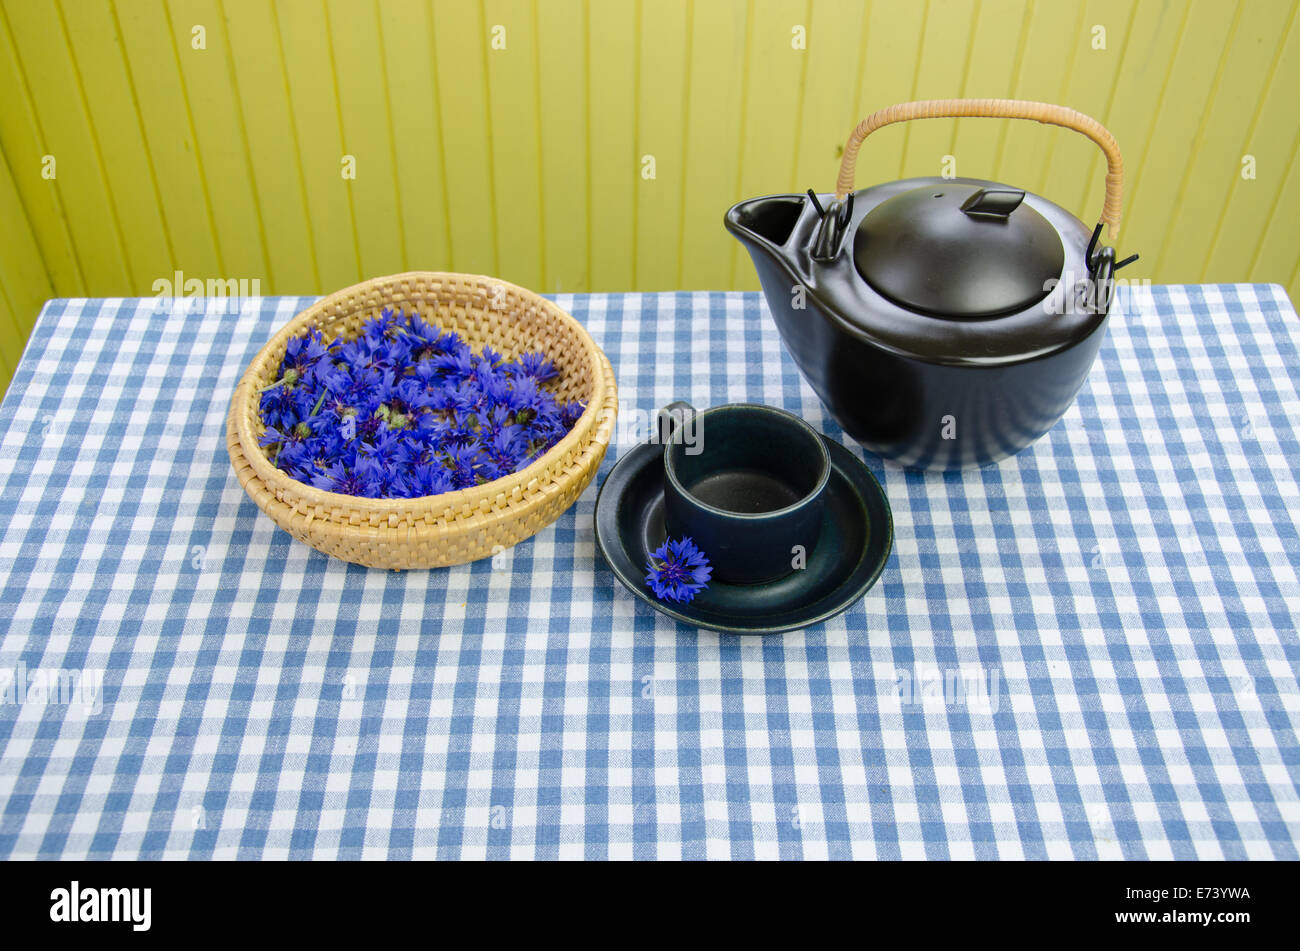 Mañana curación aromáticas frescas aciano juego de té en la mesa Foto de stock